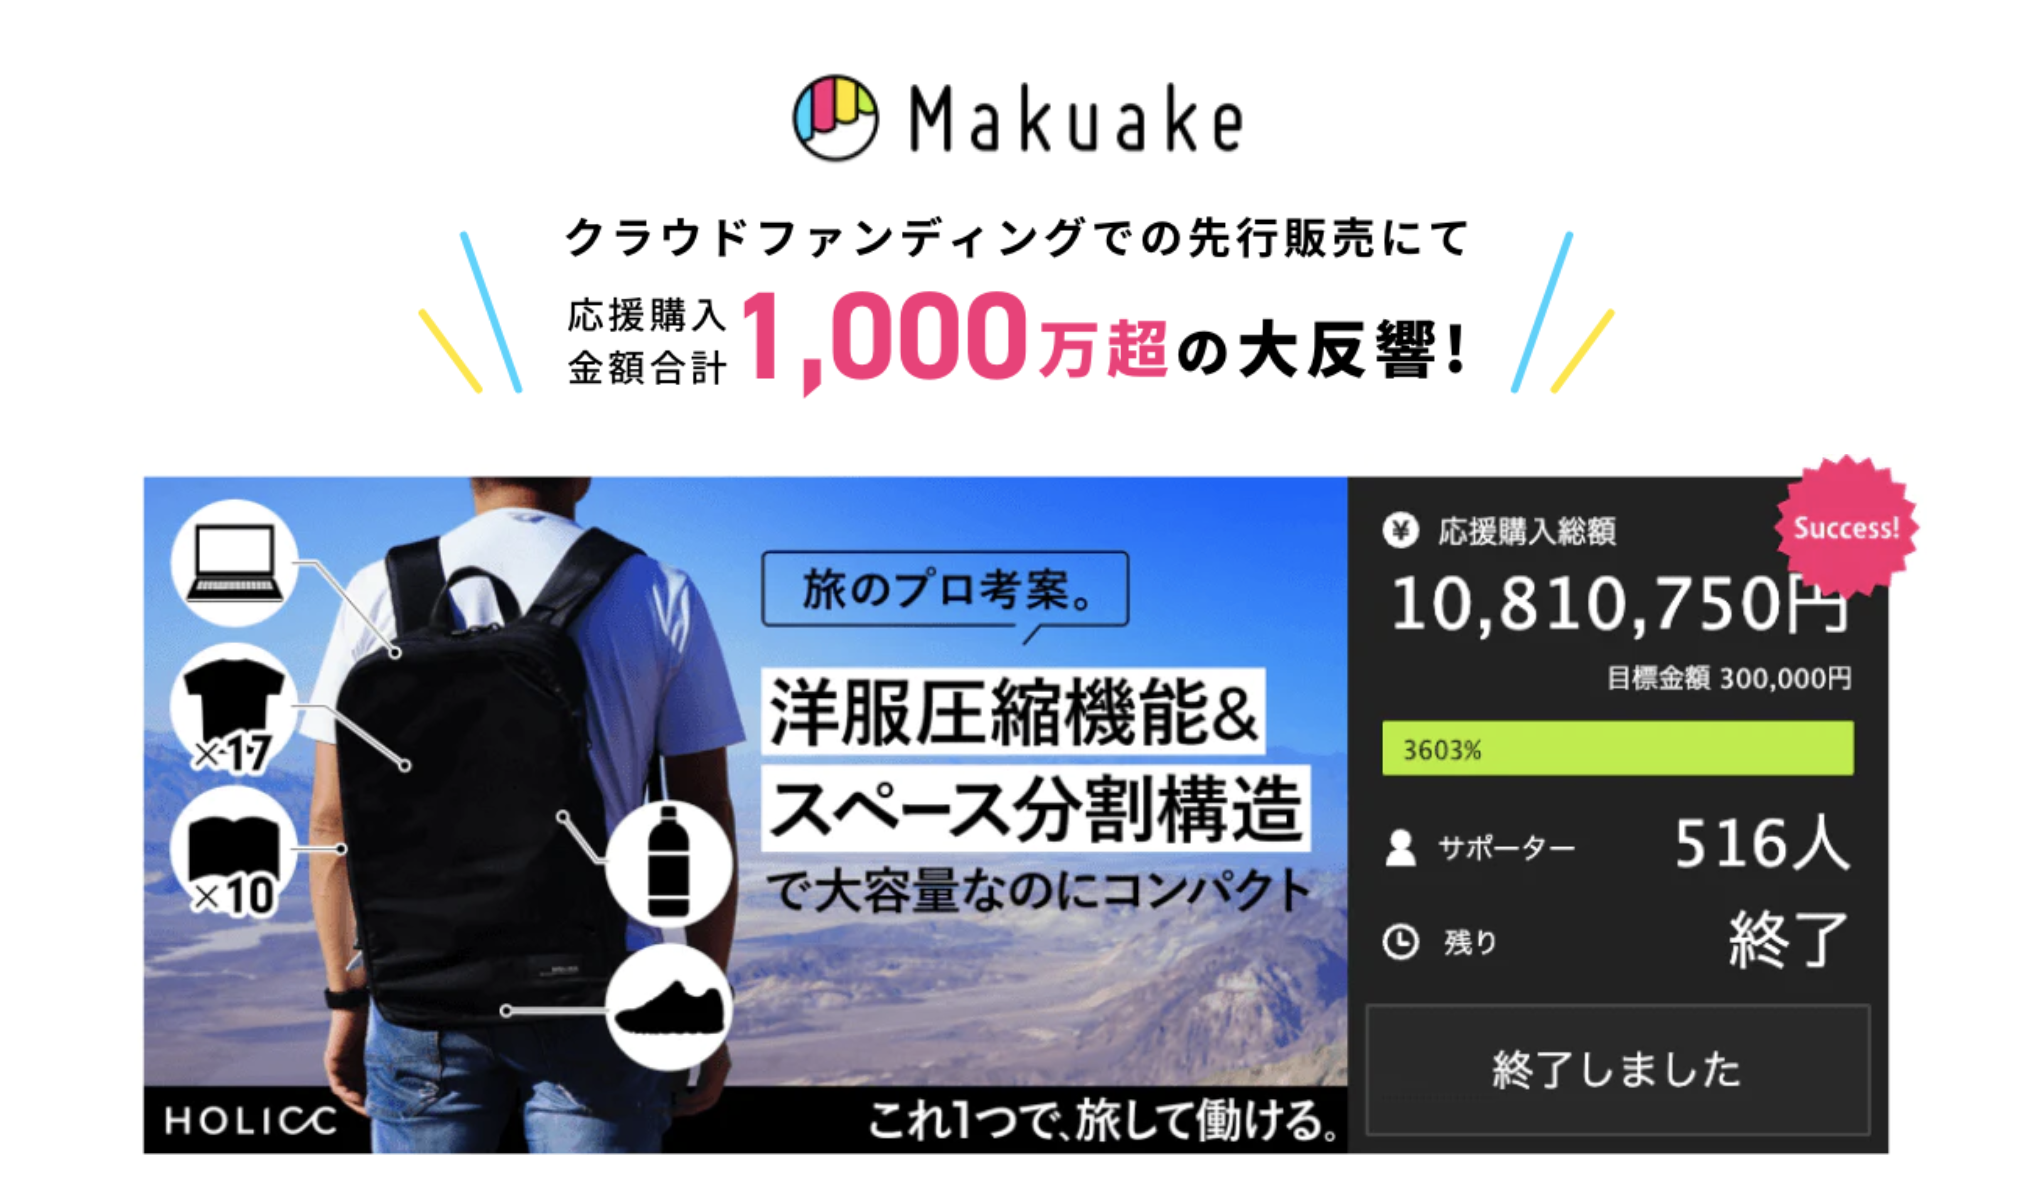 holicc_one_makuake_image